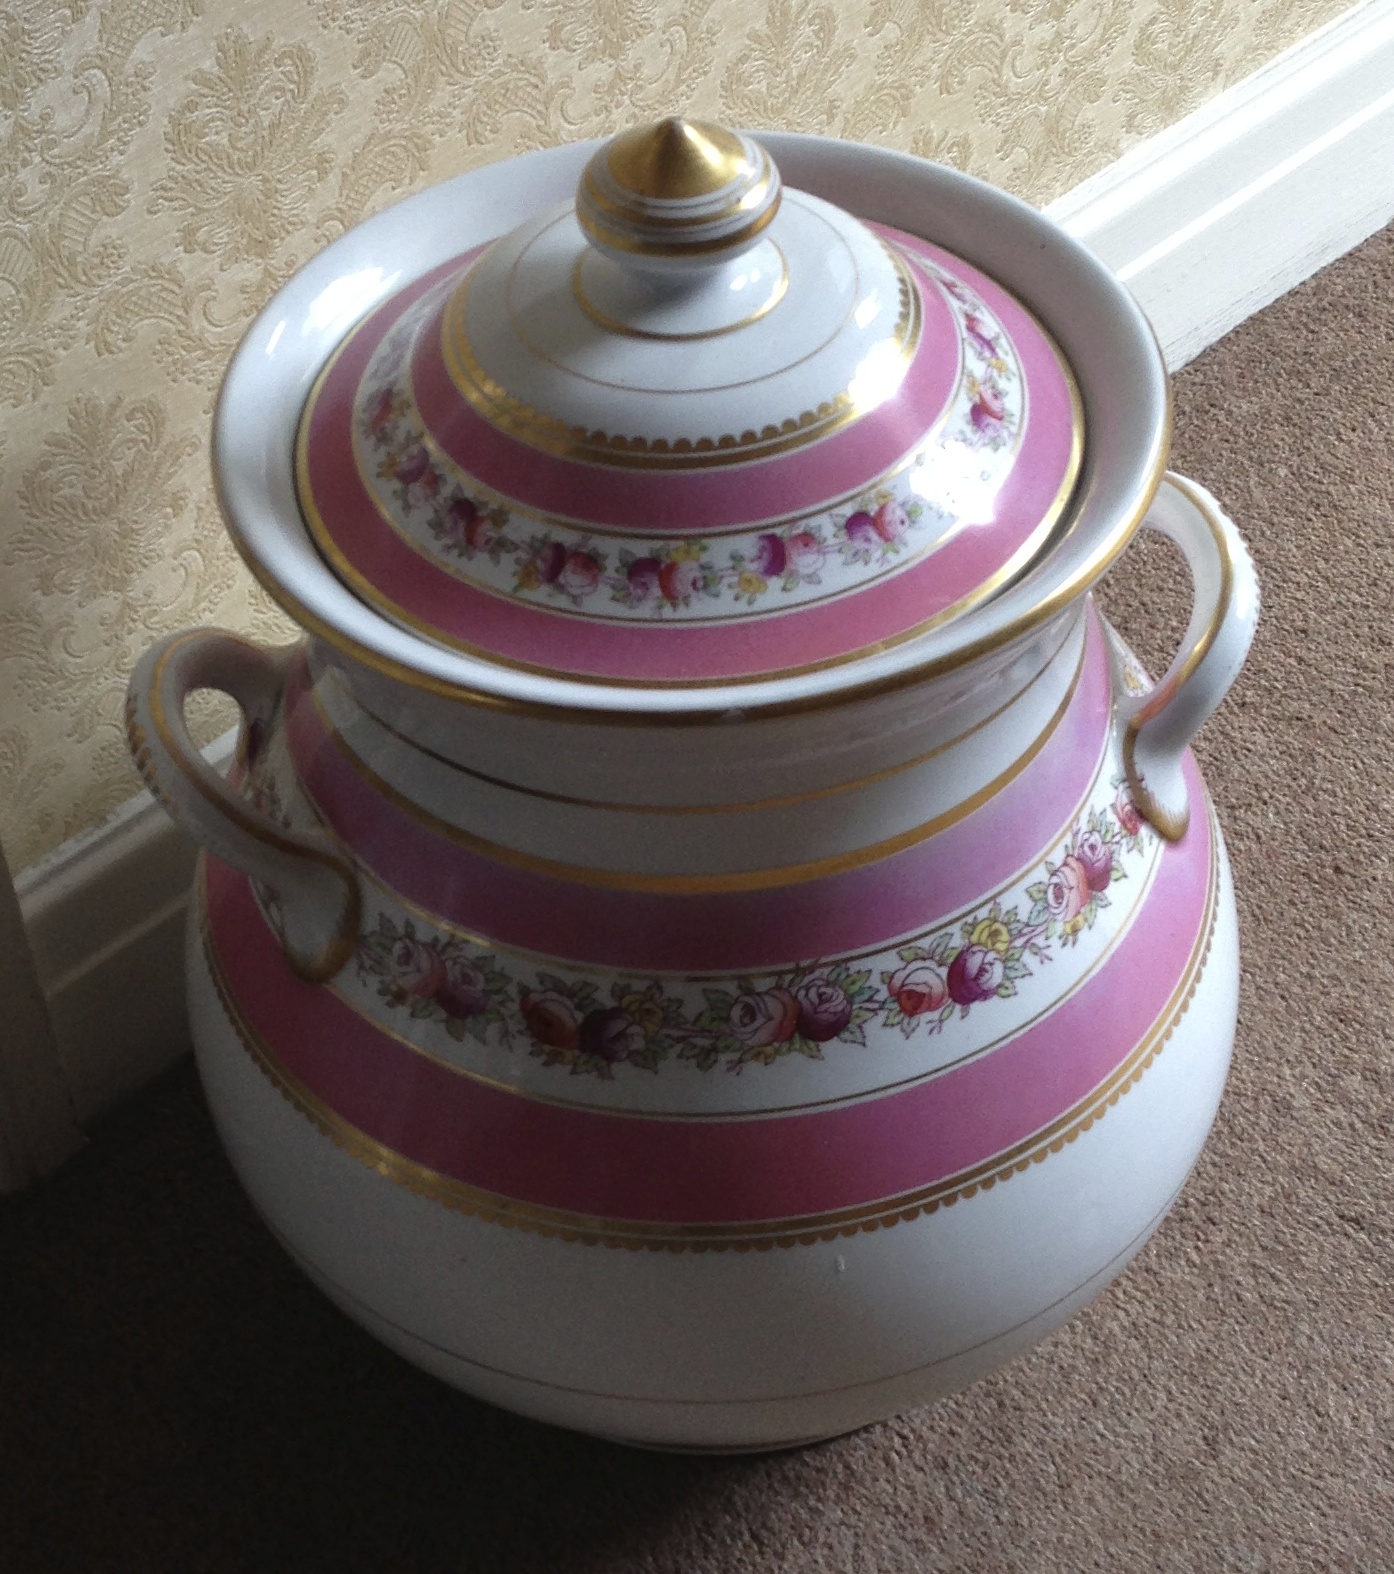 Nineteenth century decorative lidded pot.